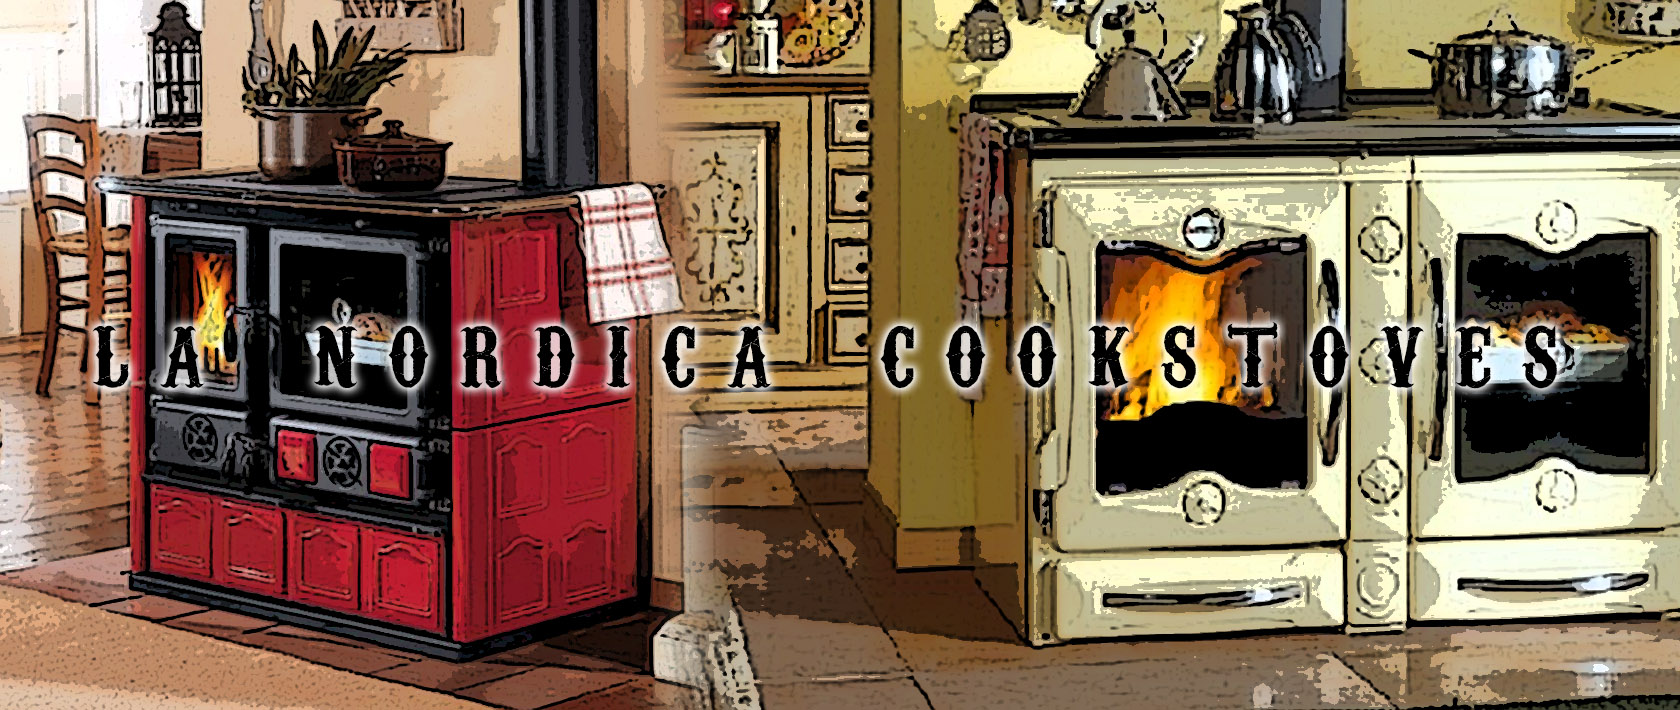 La Nordica Cookstoves Page - Obadiah's Cookstove Community